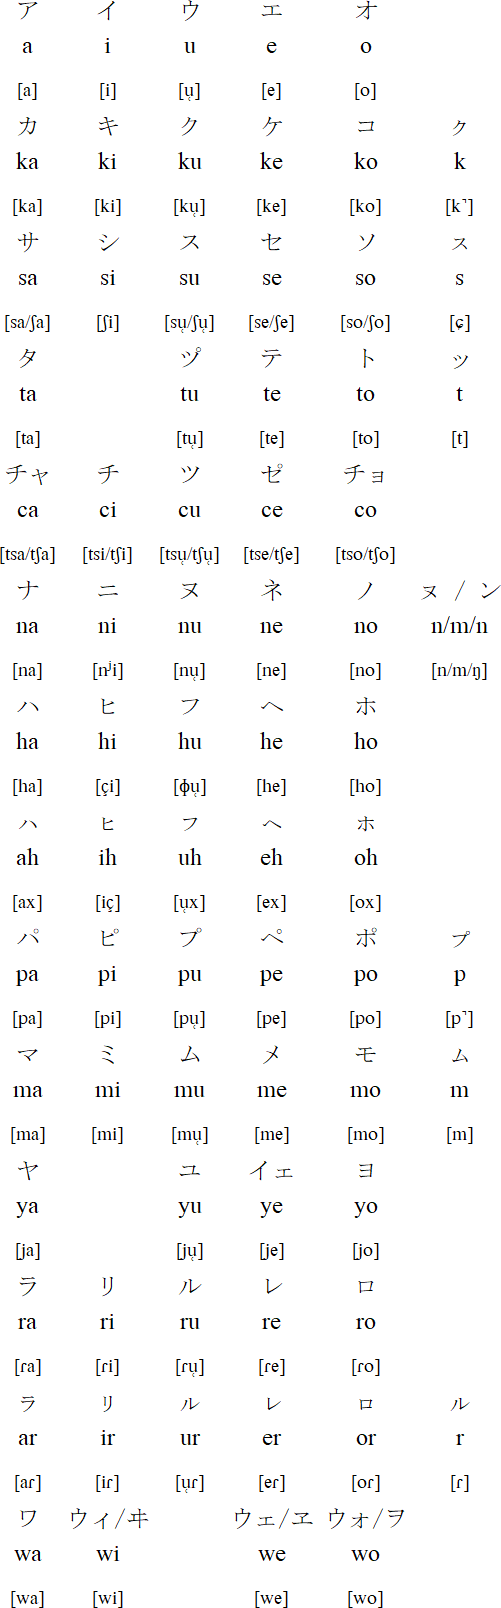 Katakana and the Latin alphabet for Ainu